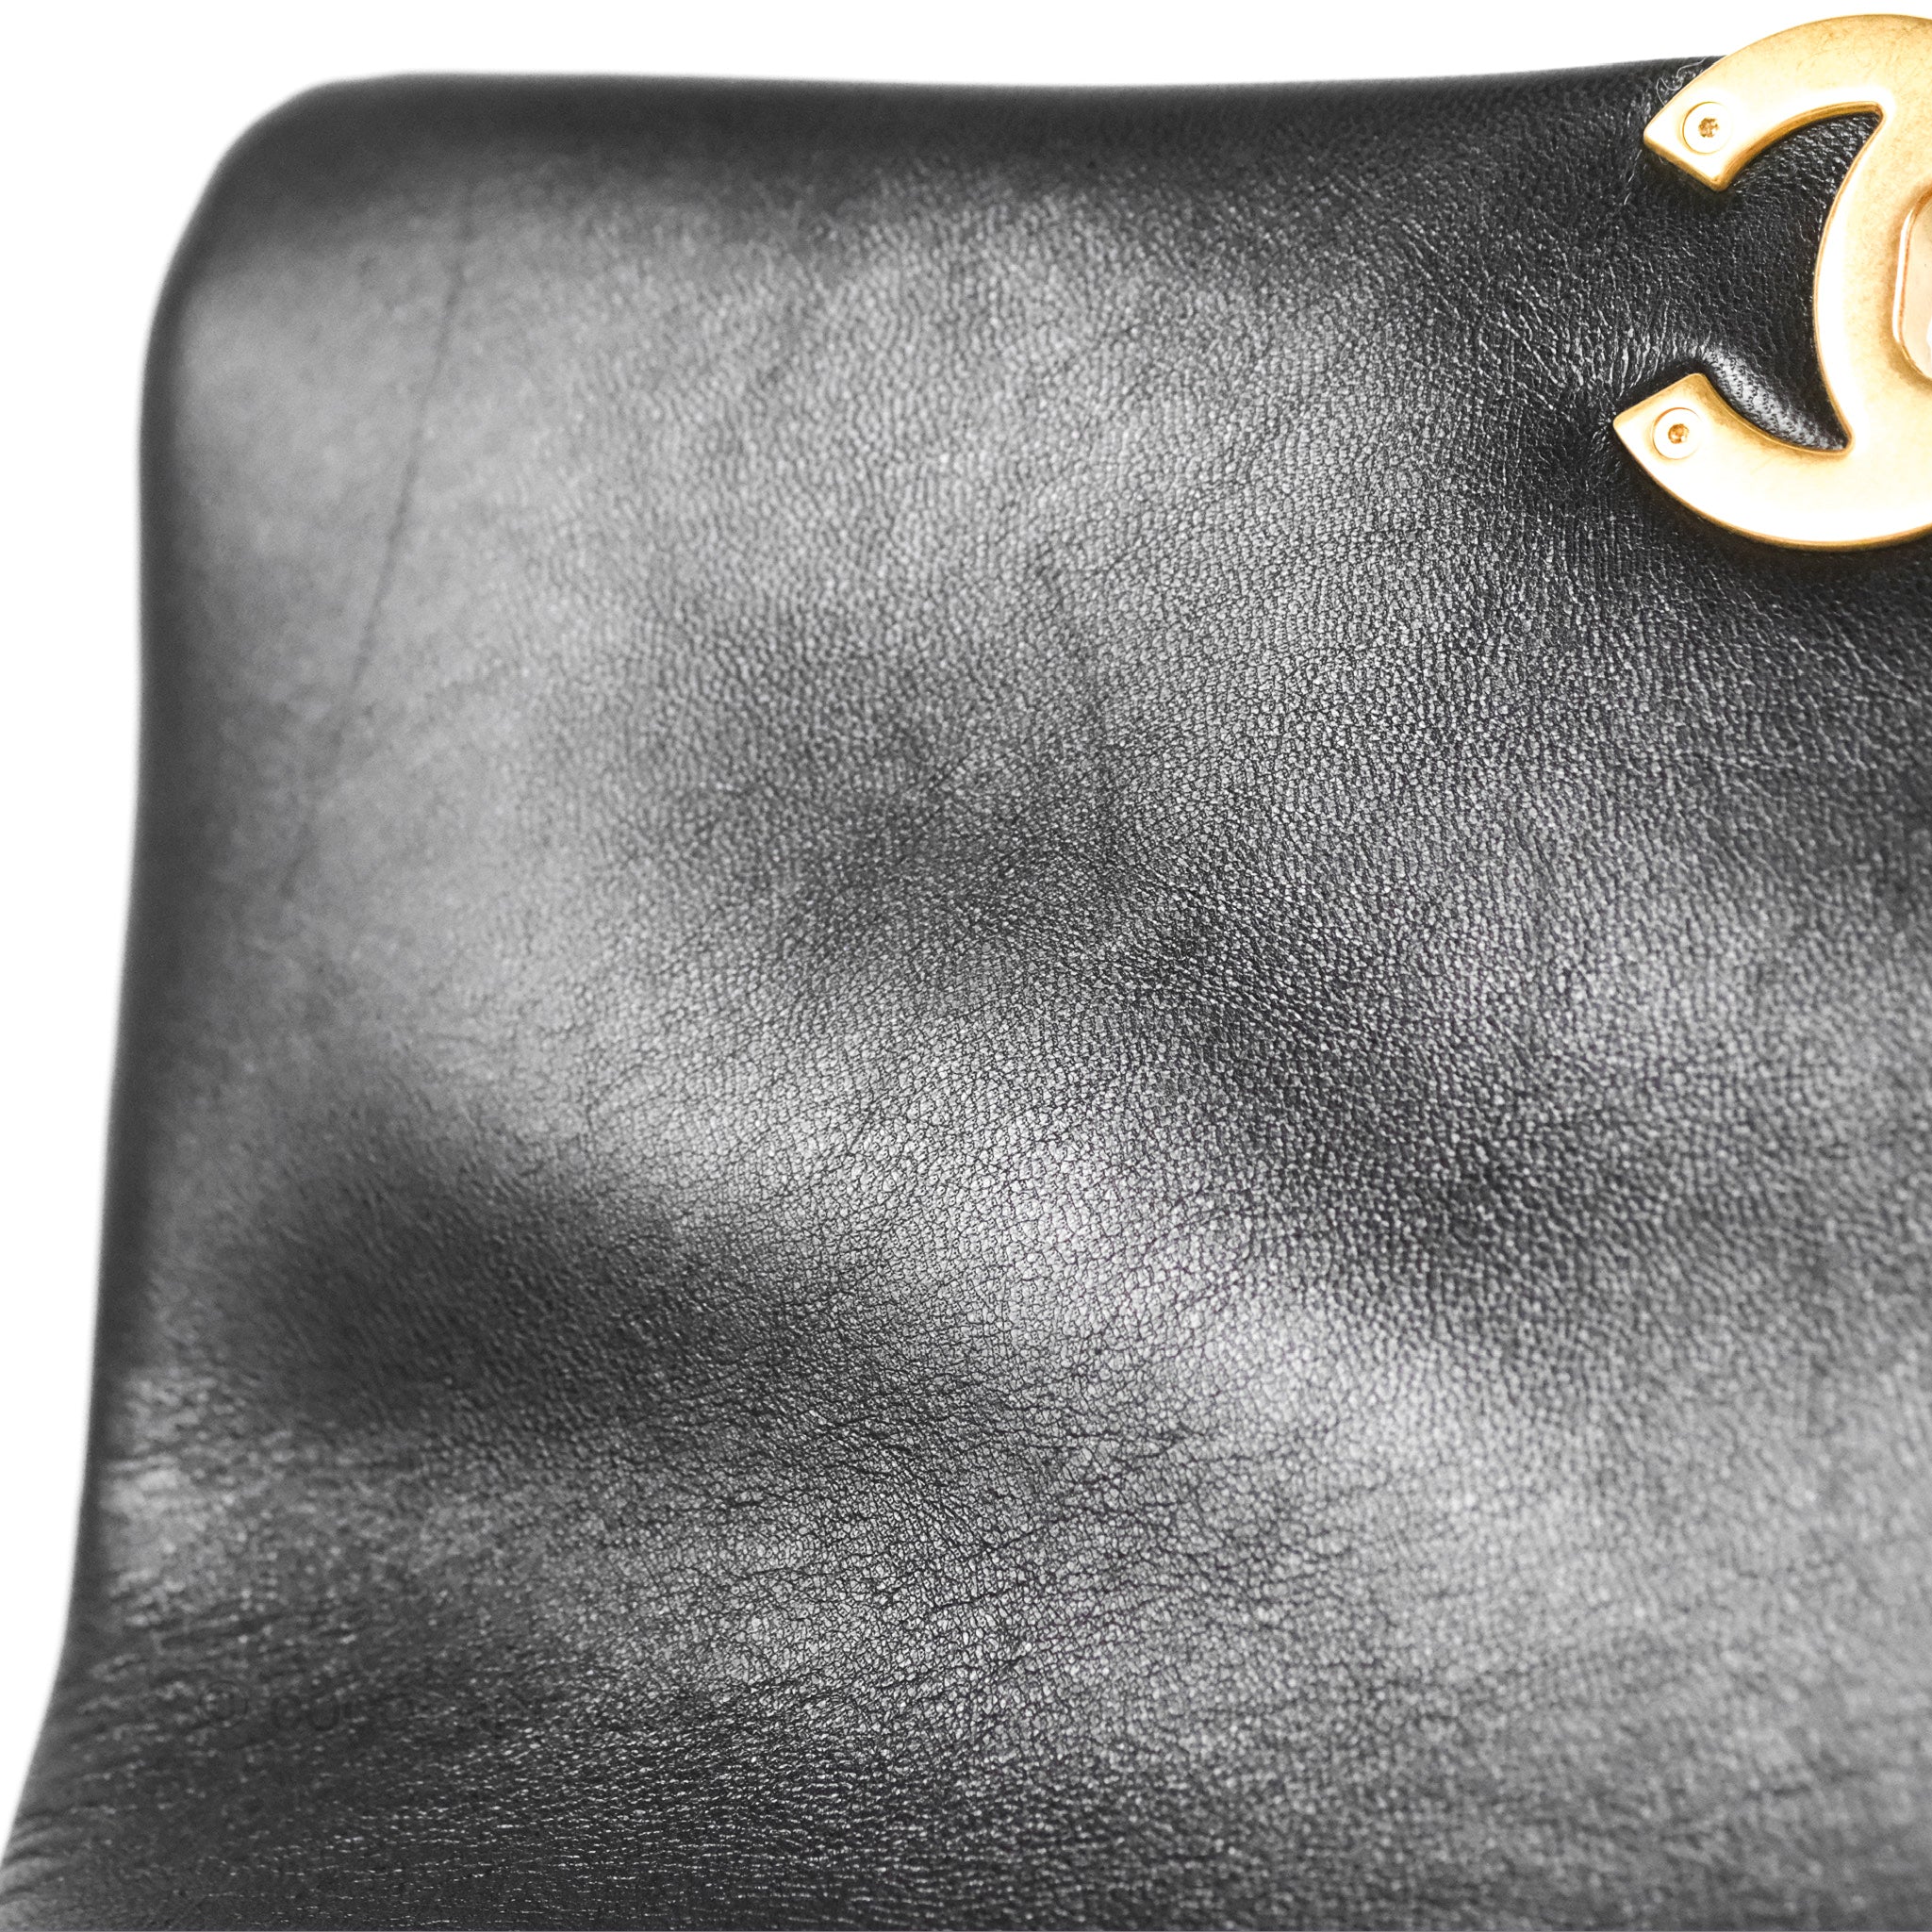 Chanel 19 Medium Black Goatskin Mixed Hardware – Coco Approved Studio